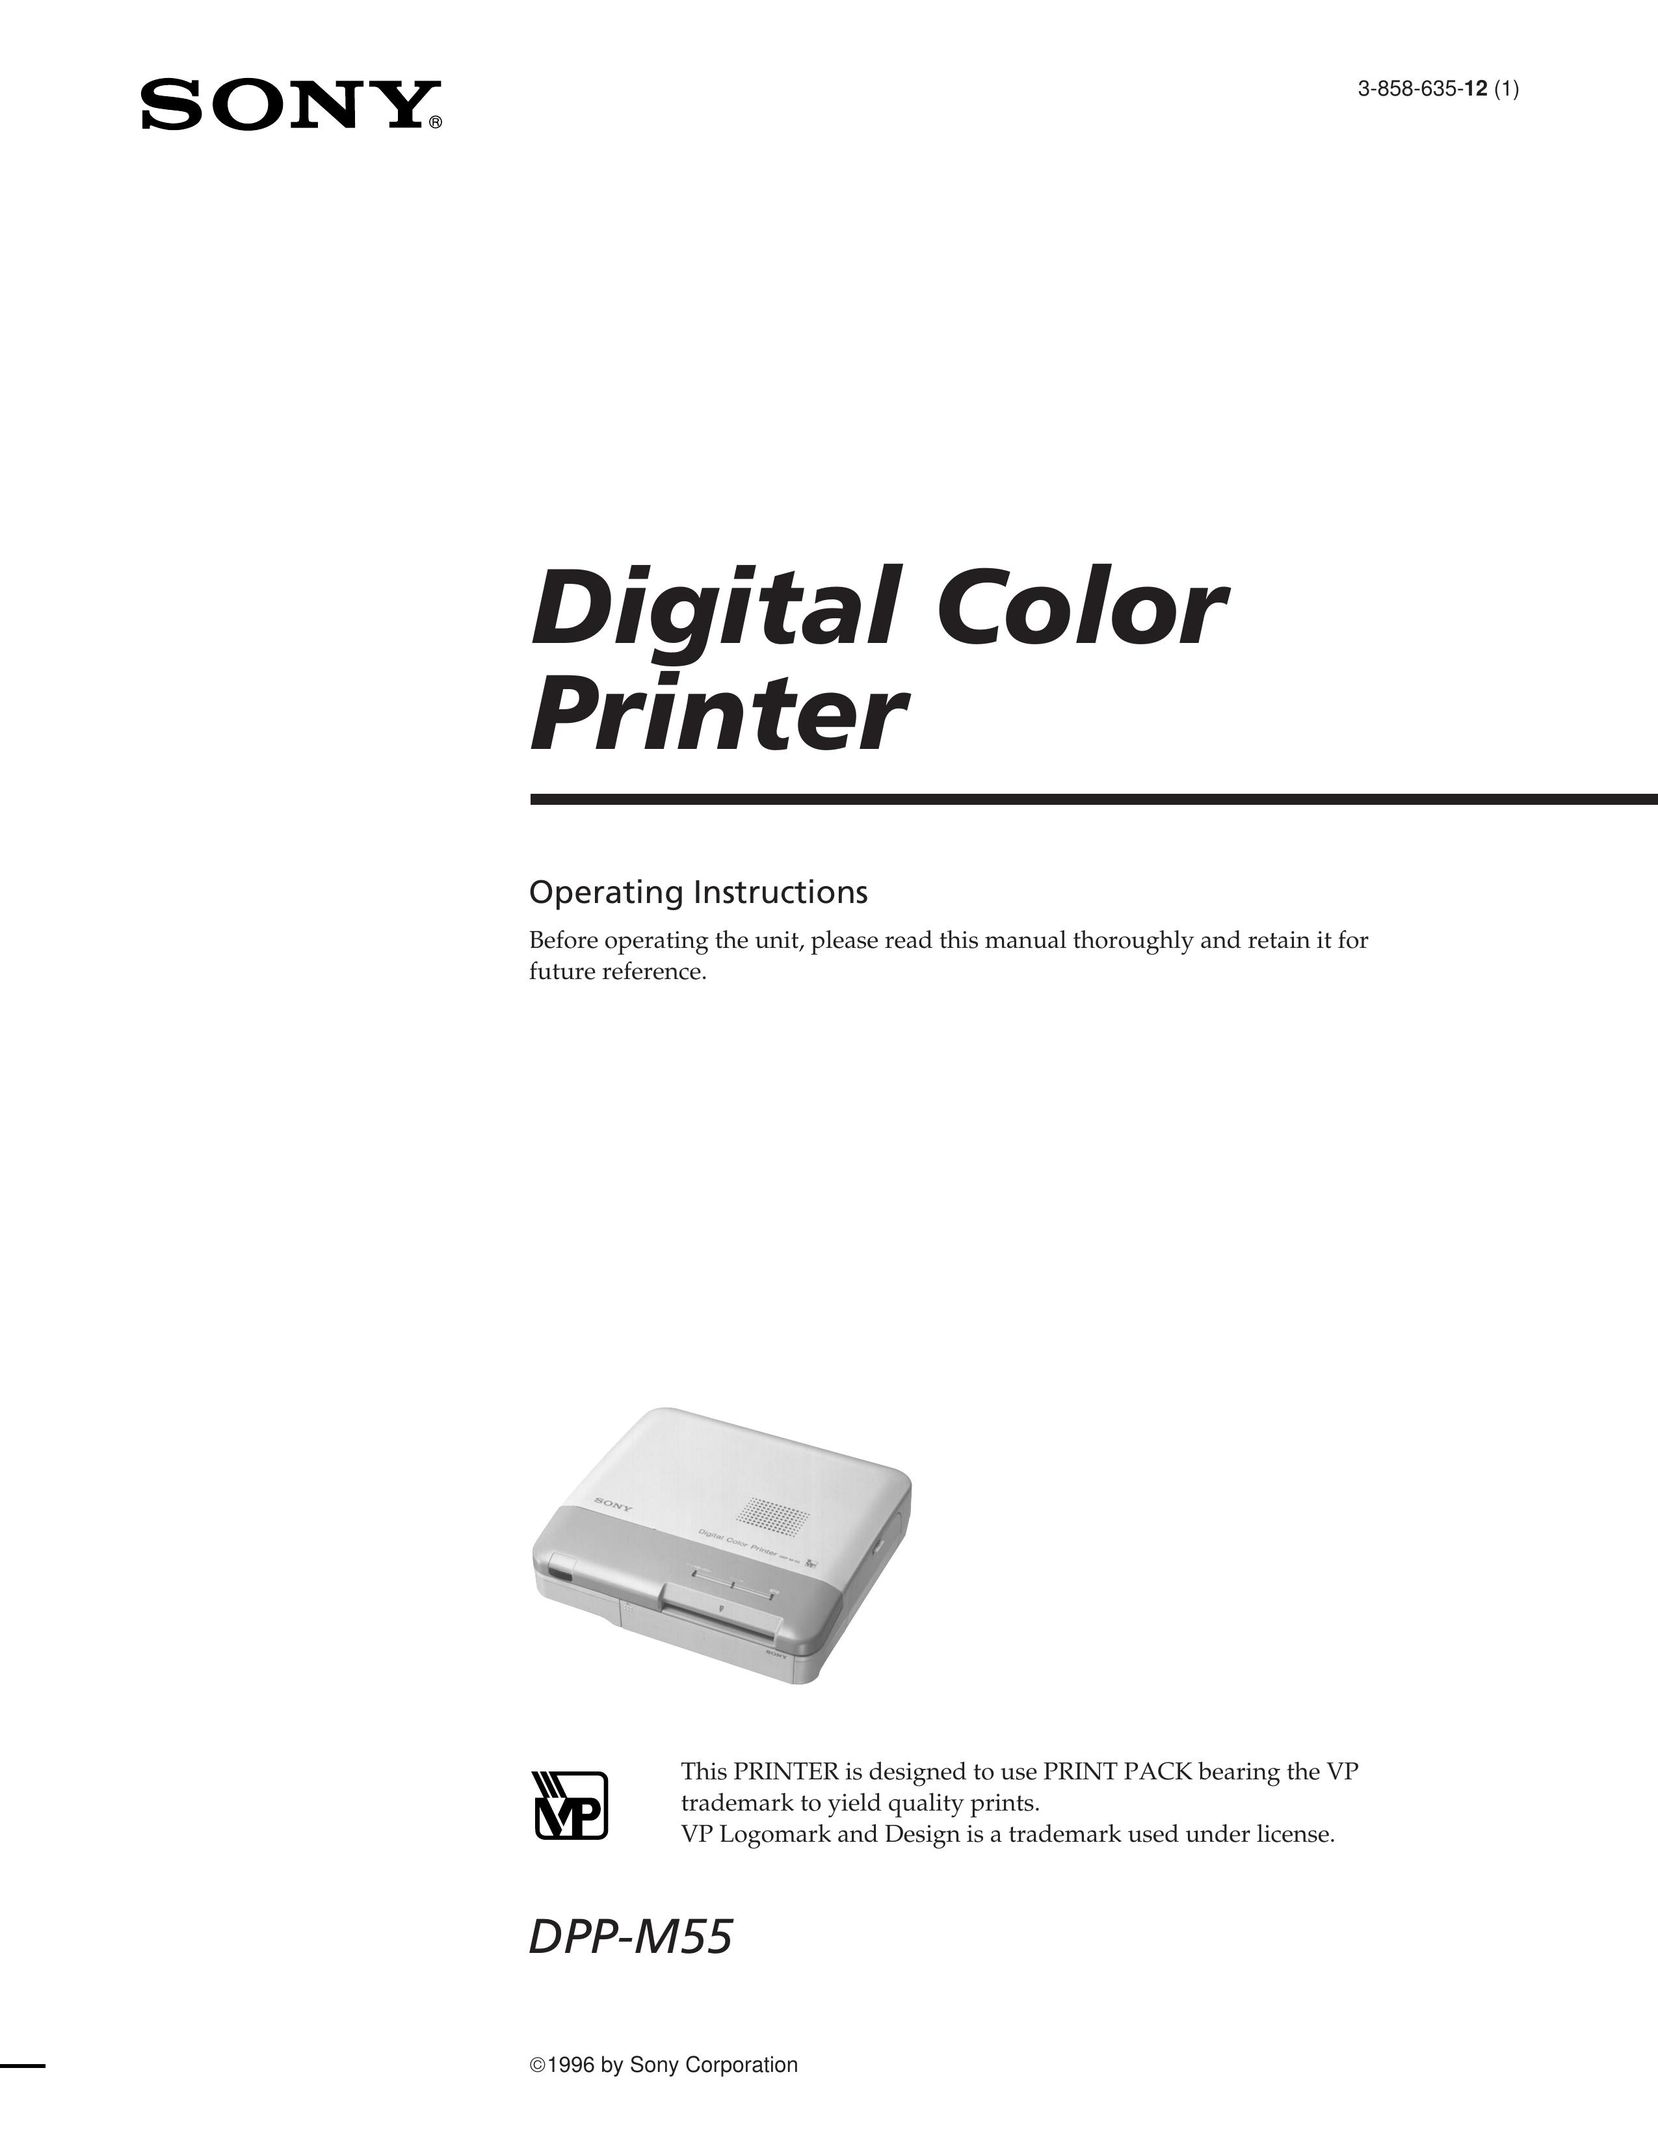 Sony DPP-M55 Printer User Manual